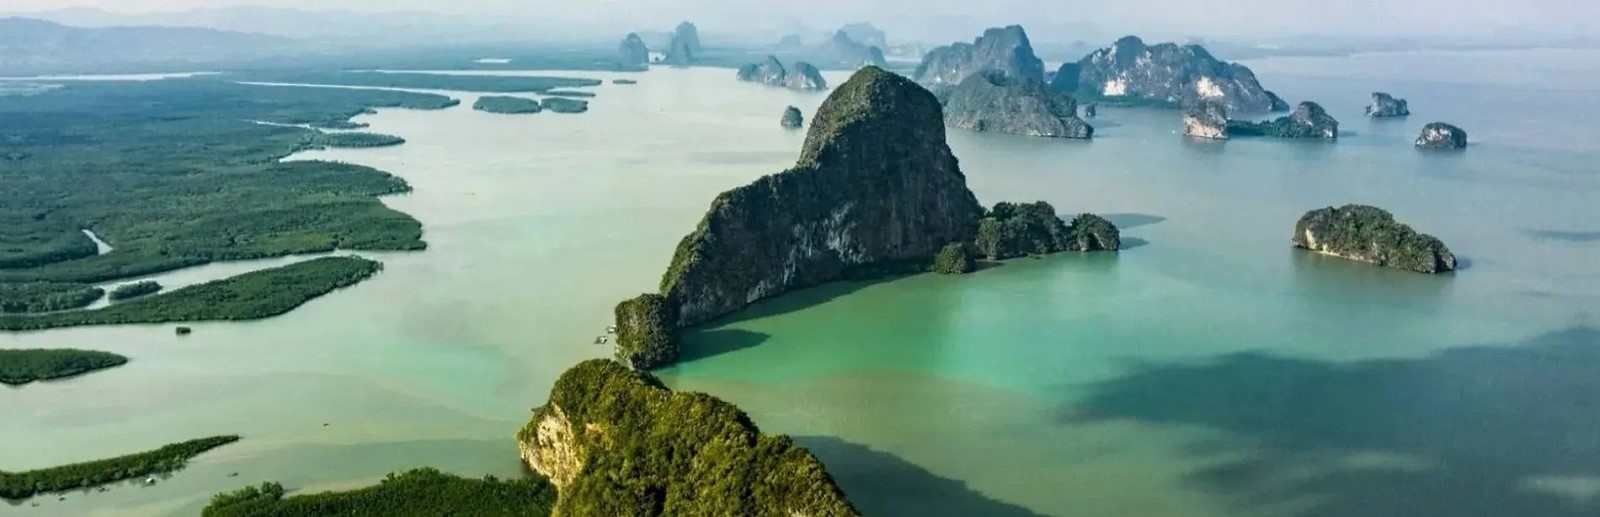 Baie de Phang Nga en Thaïlande.jpg